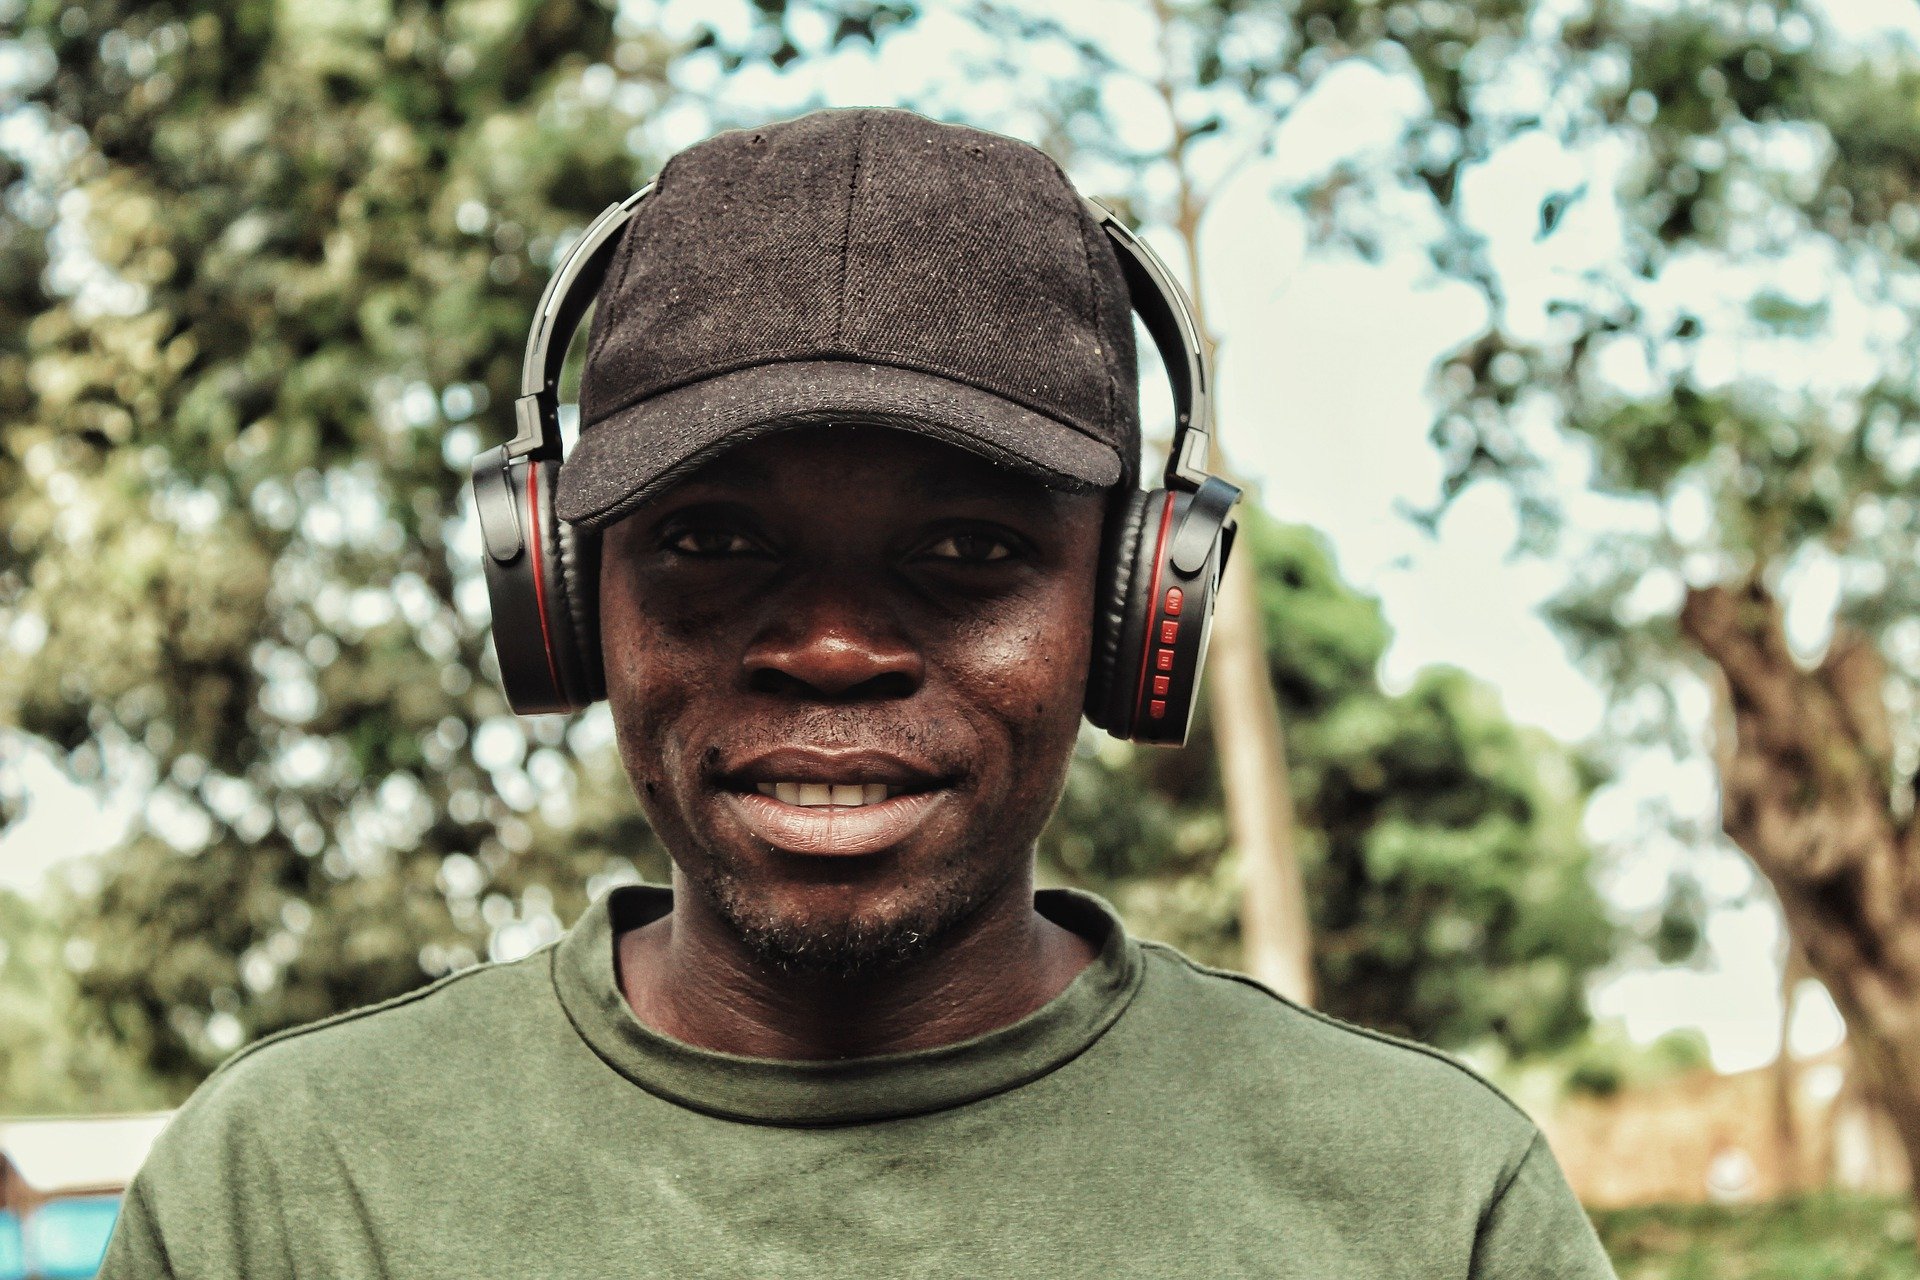 Man smiling and wearing headphones